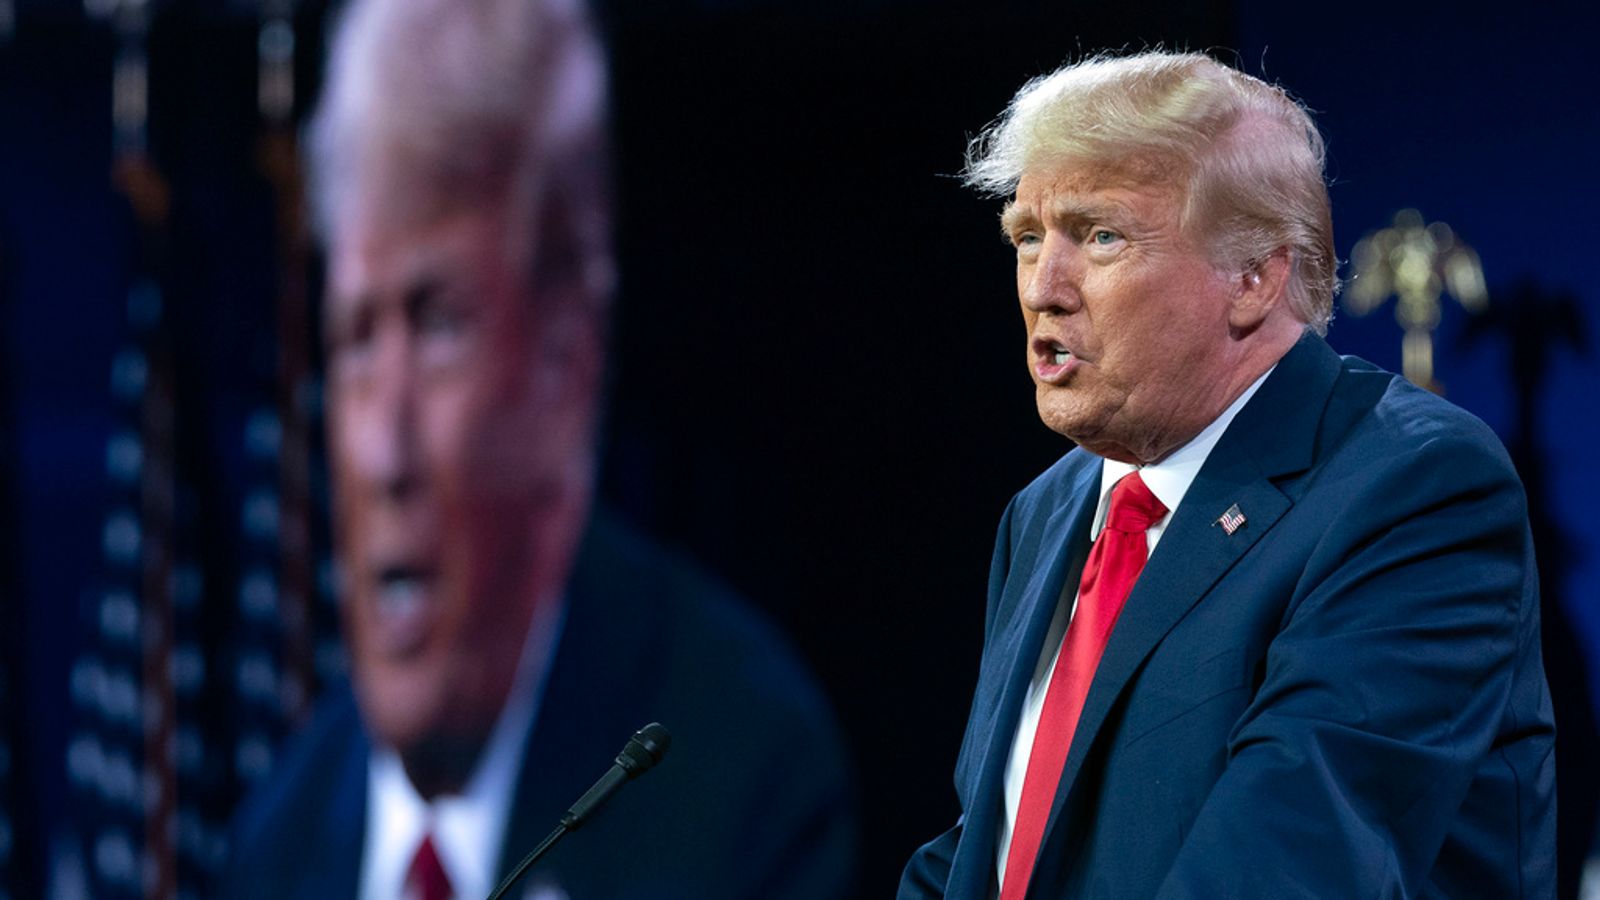 Donald Trump widens lead over Republican rival despite legal woes, poll shows